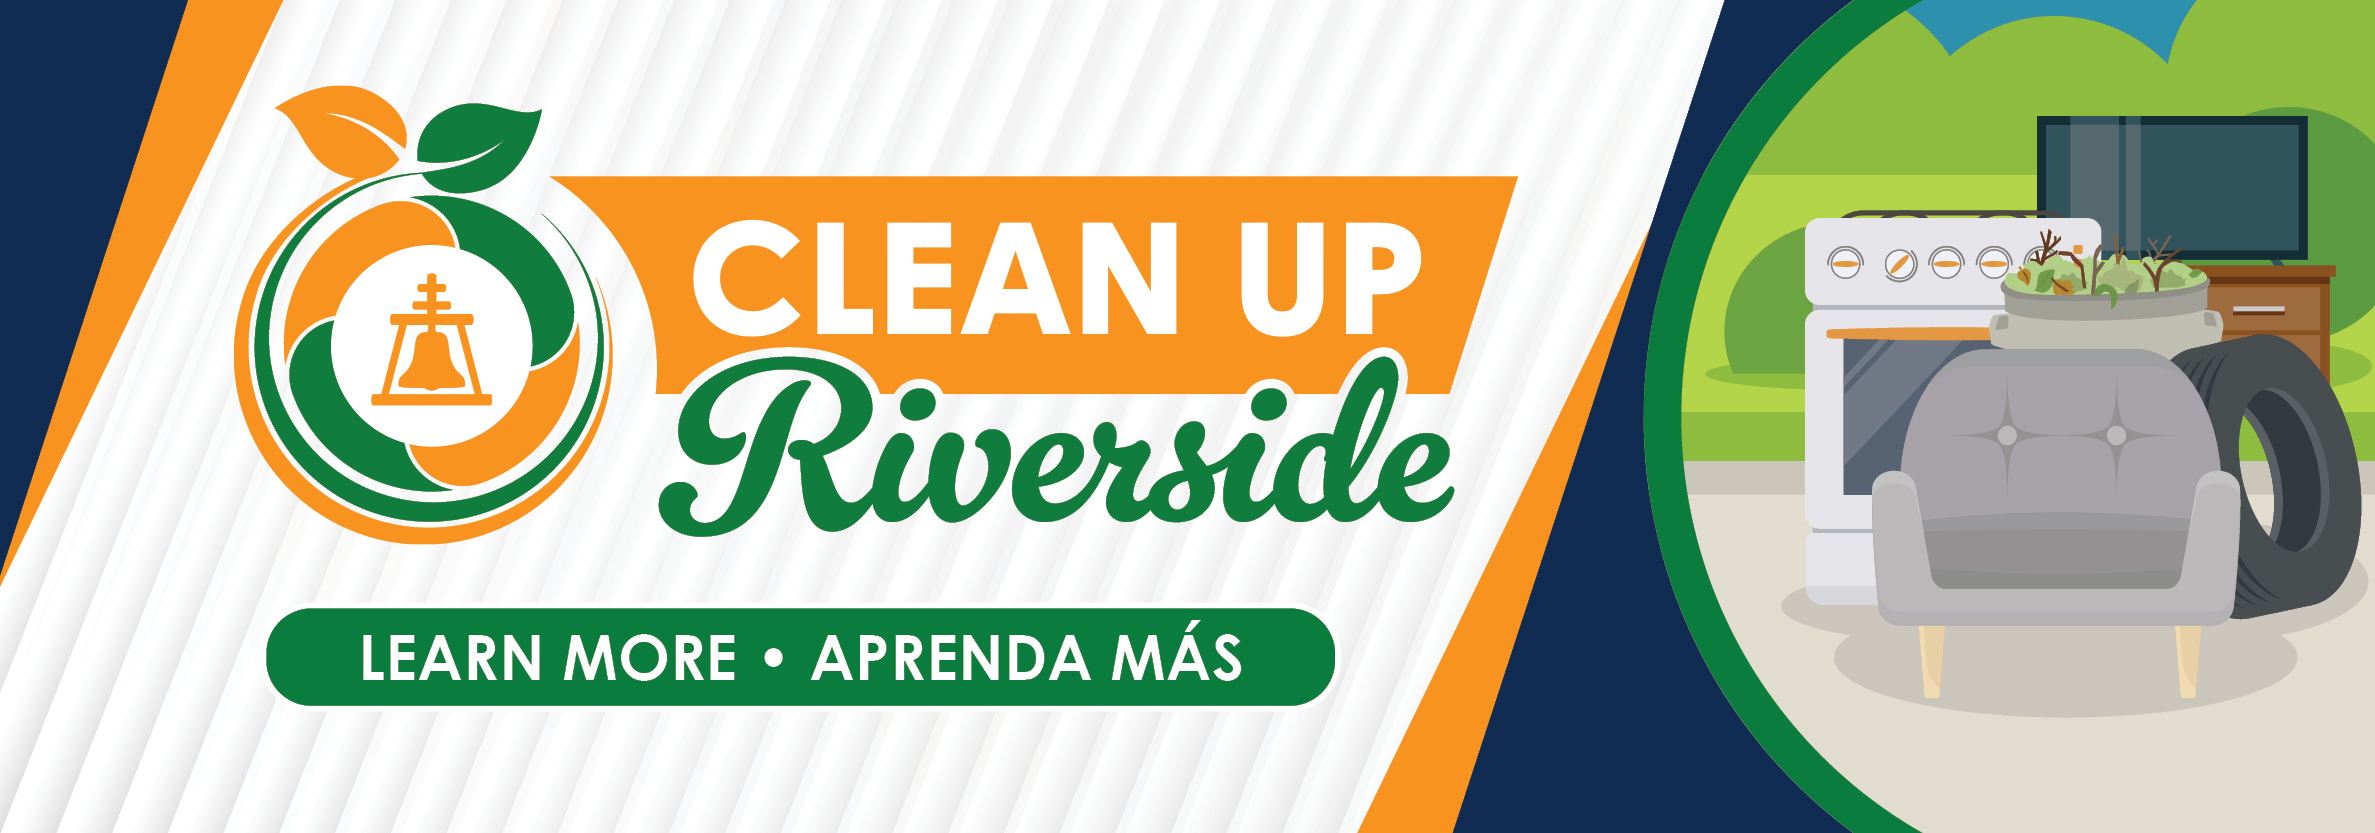 Clean Up Riverside